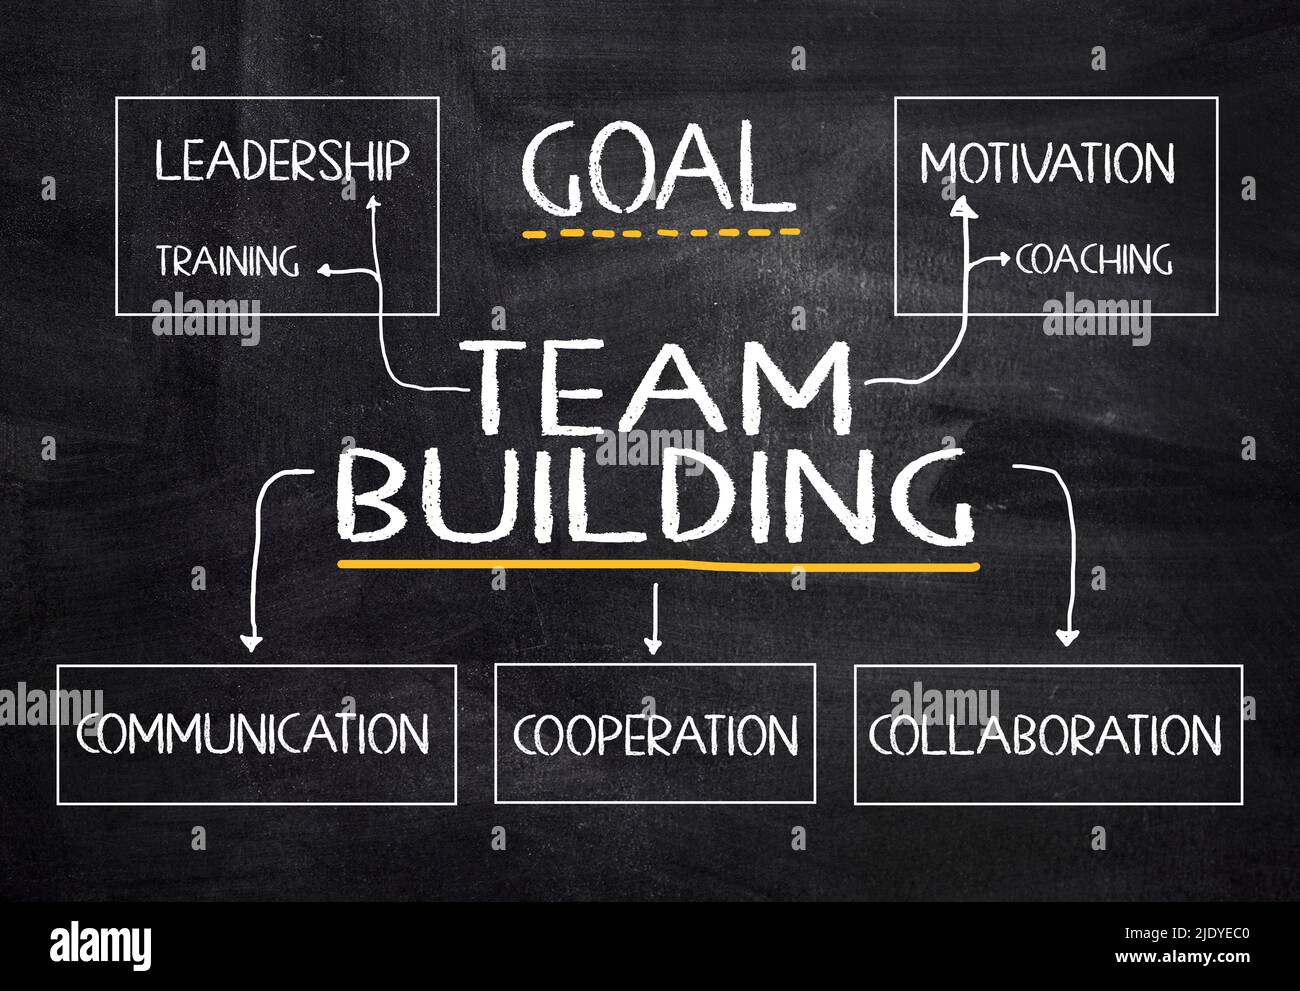 TEAM BUILDING OBJECTIVES on blackboard. Team building Business concept  ideas Stock Photo - Alamy